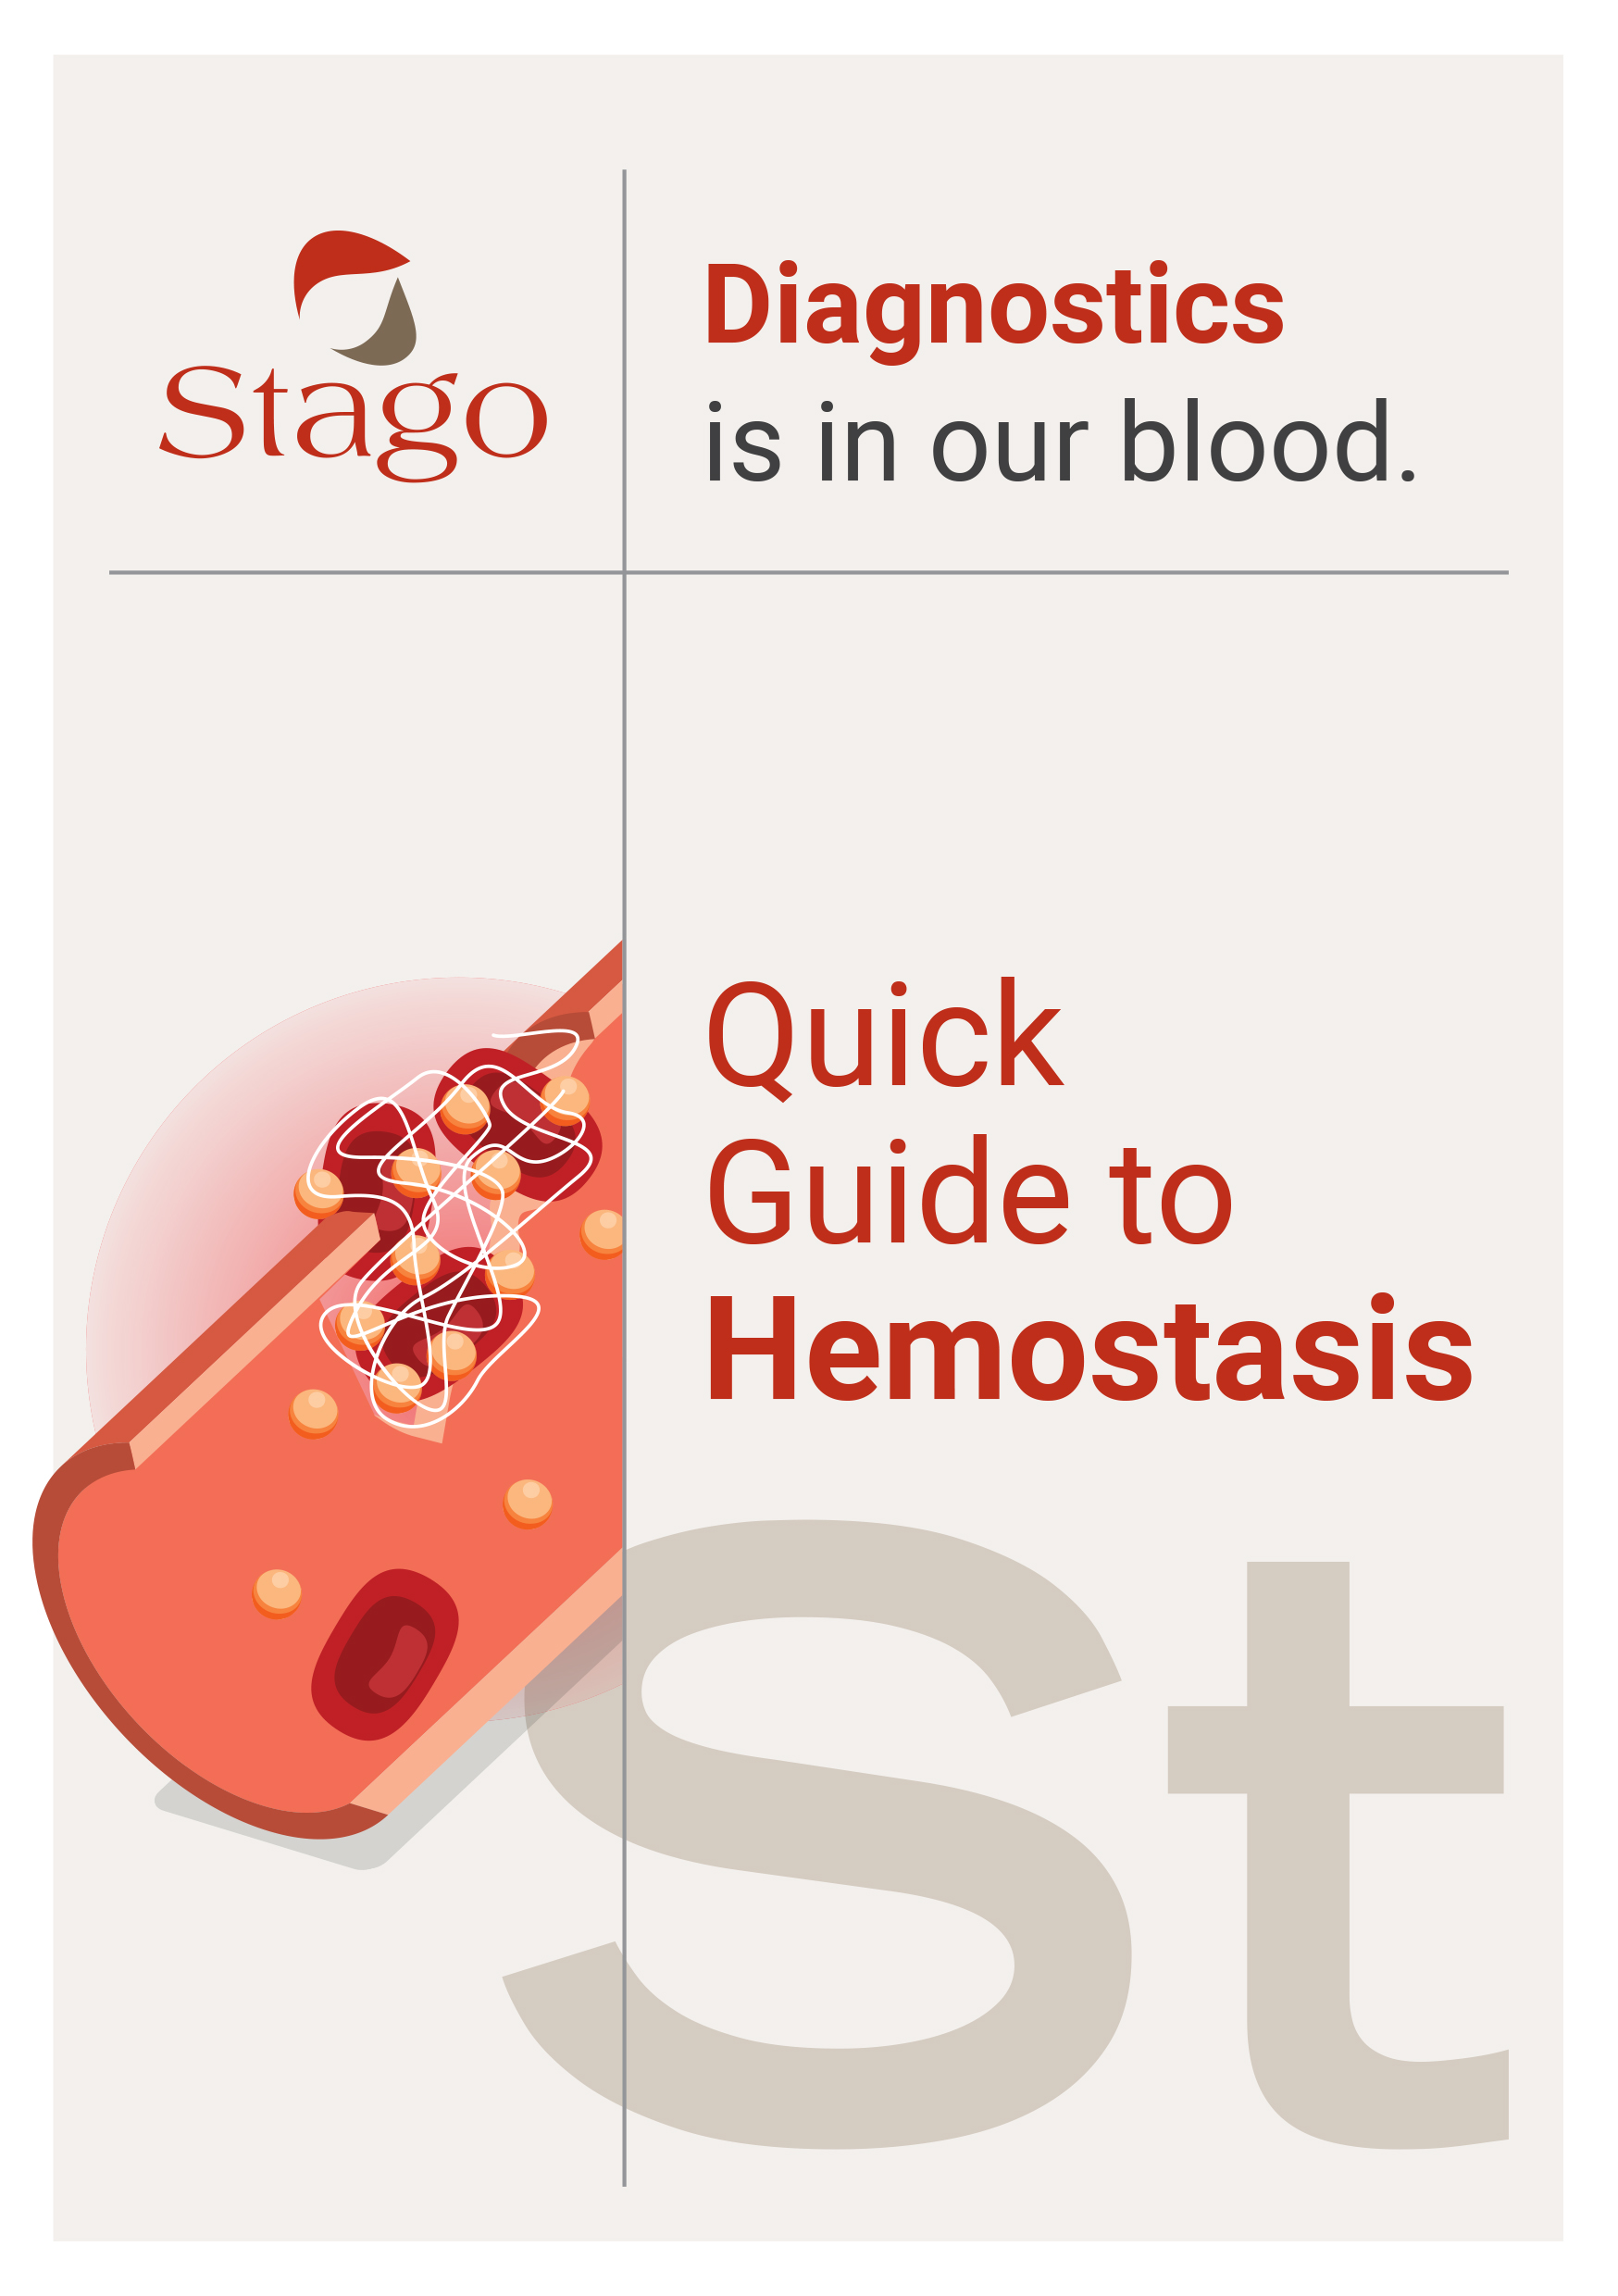 Couverture du Quick Guide to Hemostasis de Stago